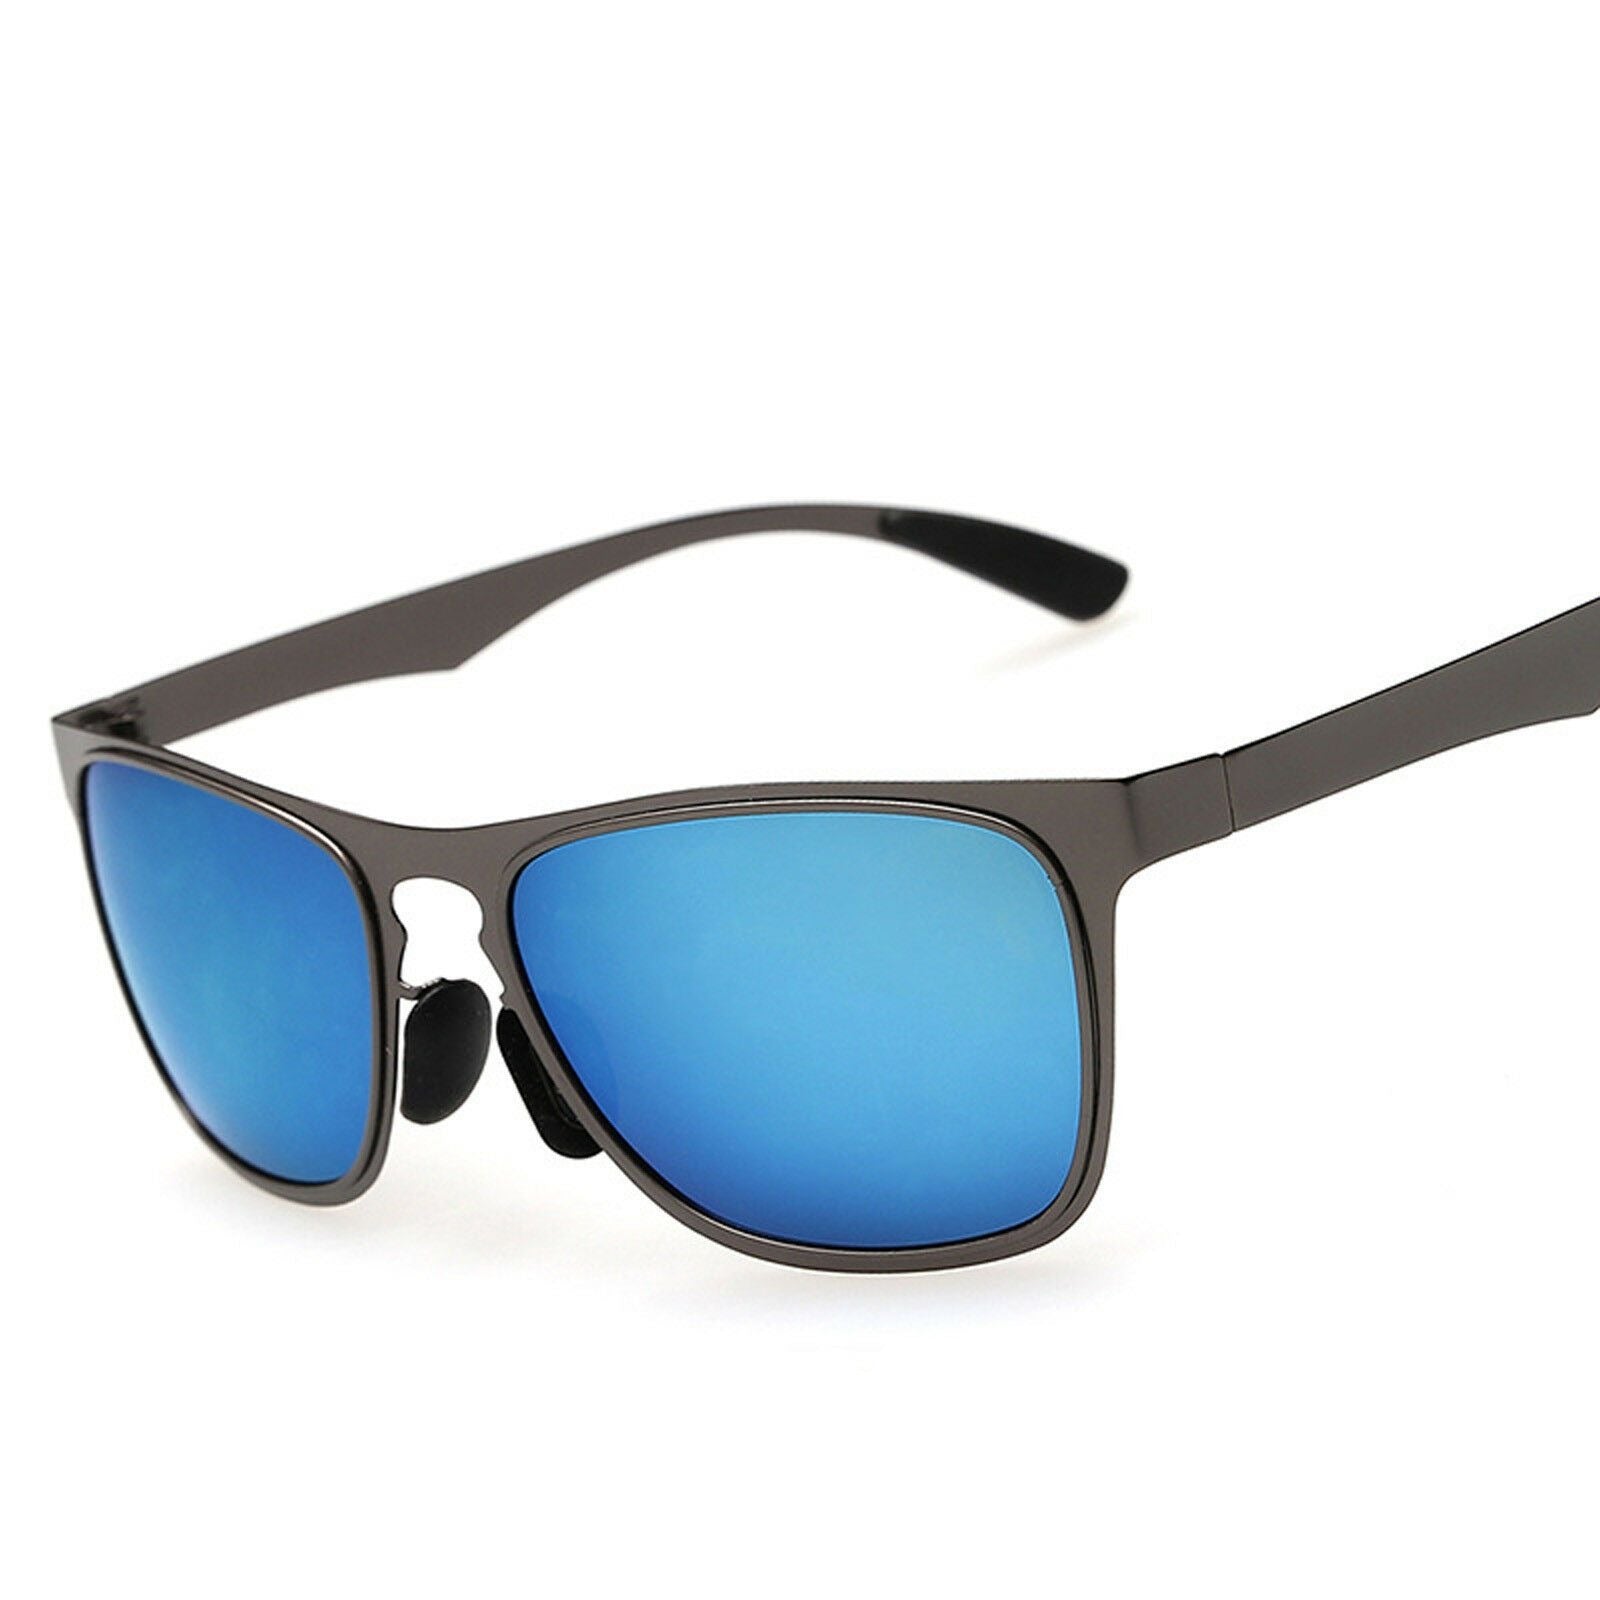 Sunglasses Mens UV400 Driving Outdoor Sports Fashion Eyewear With Hardcase - Pantsnsox